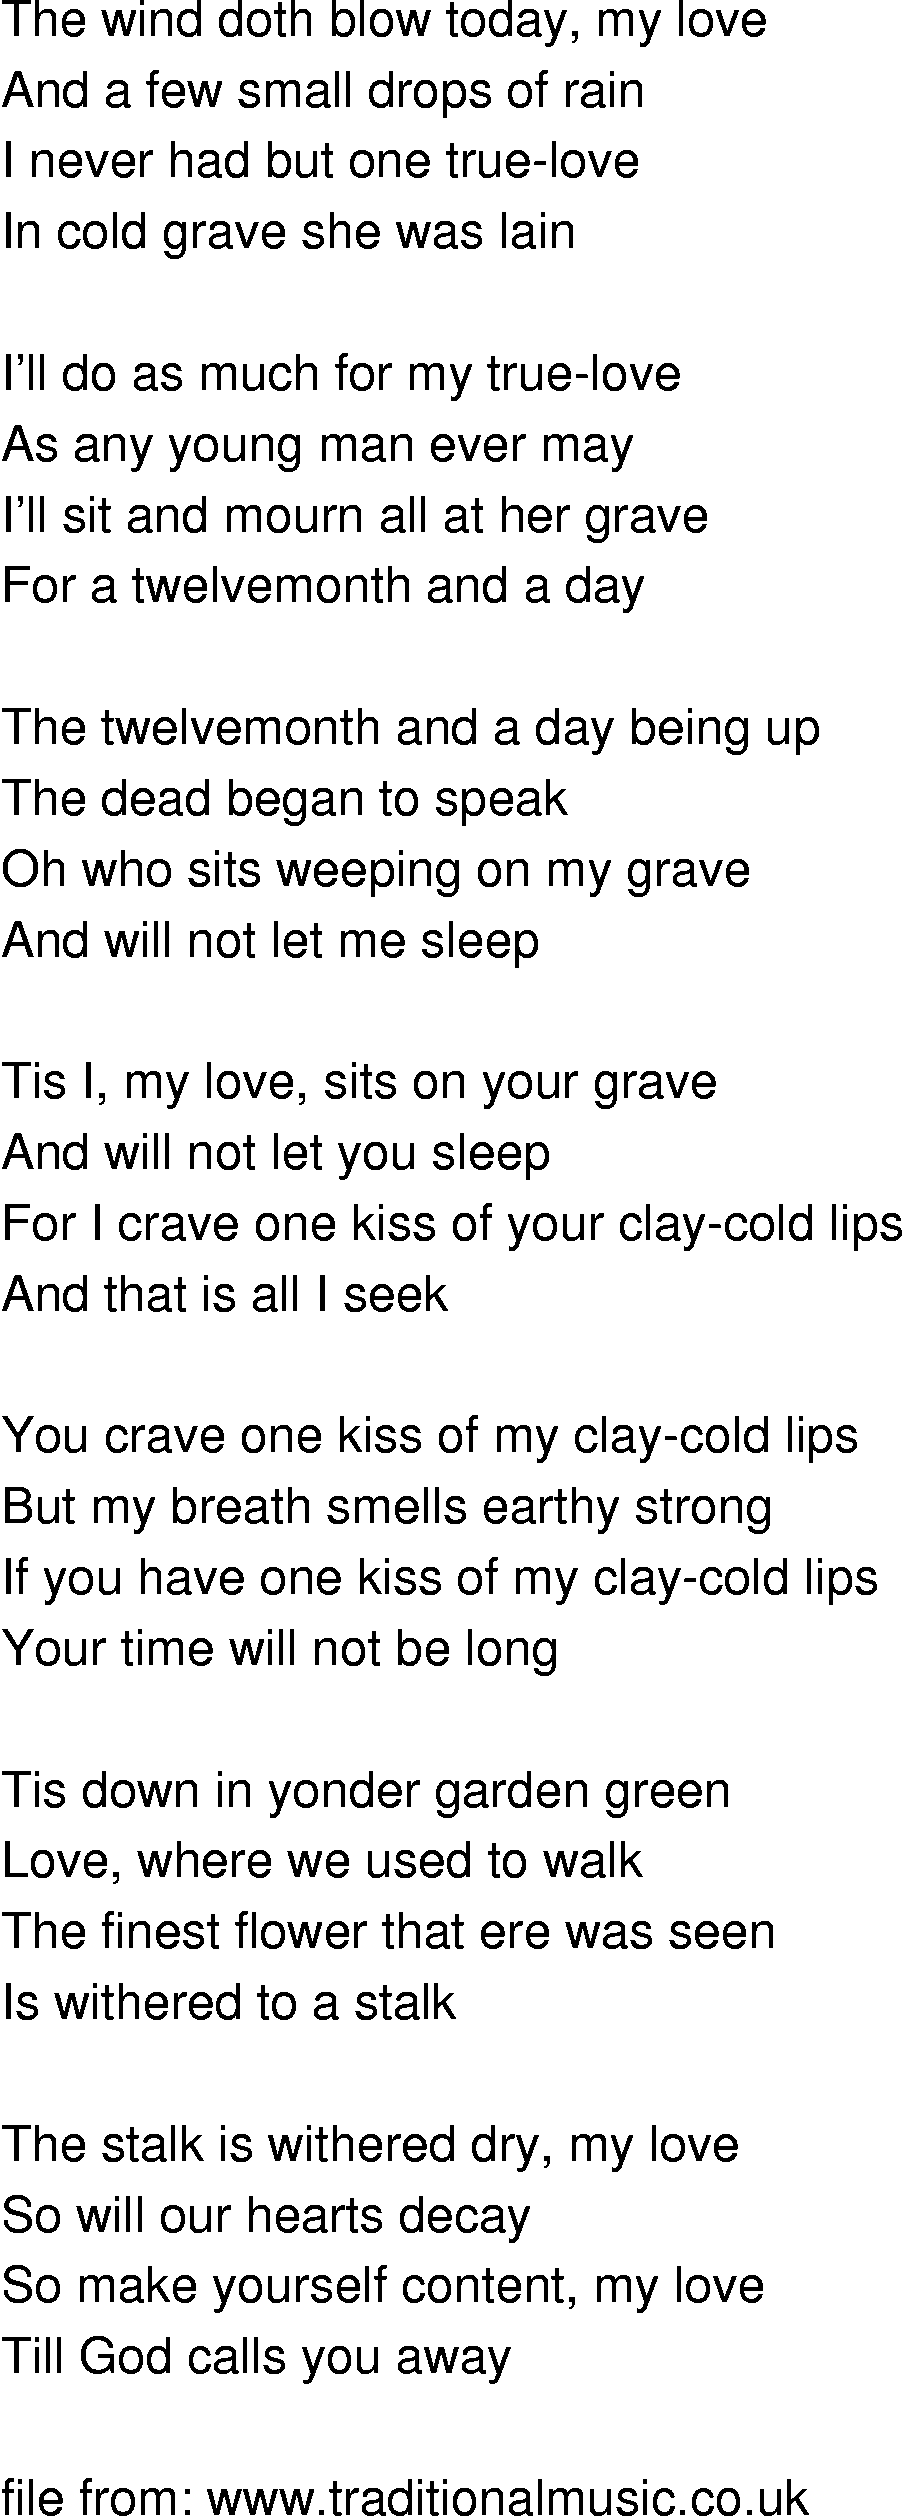 Old-Time (oldtimey) Song Lyrics - unquiet grave